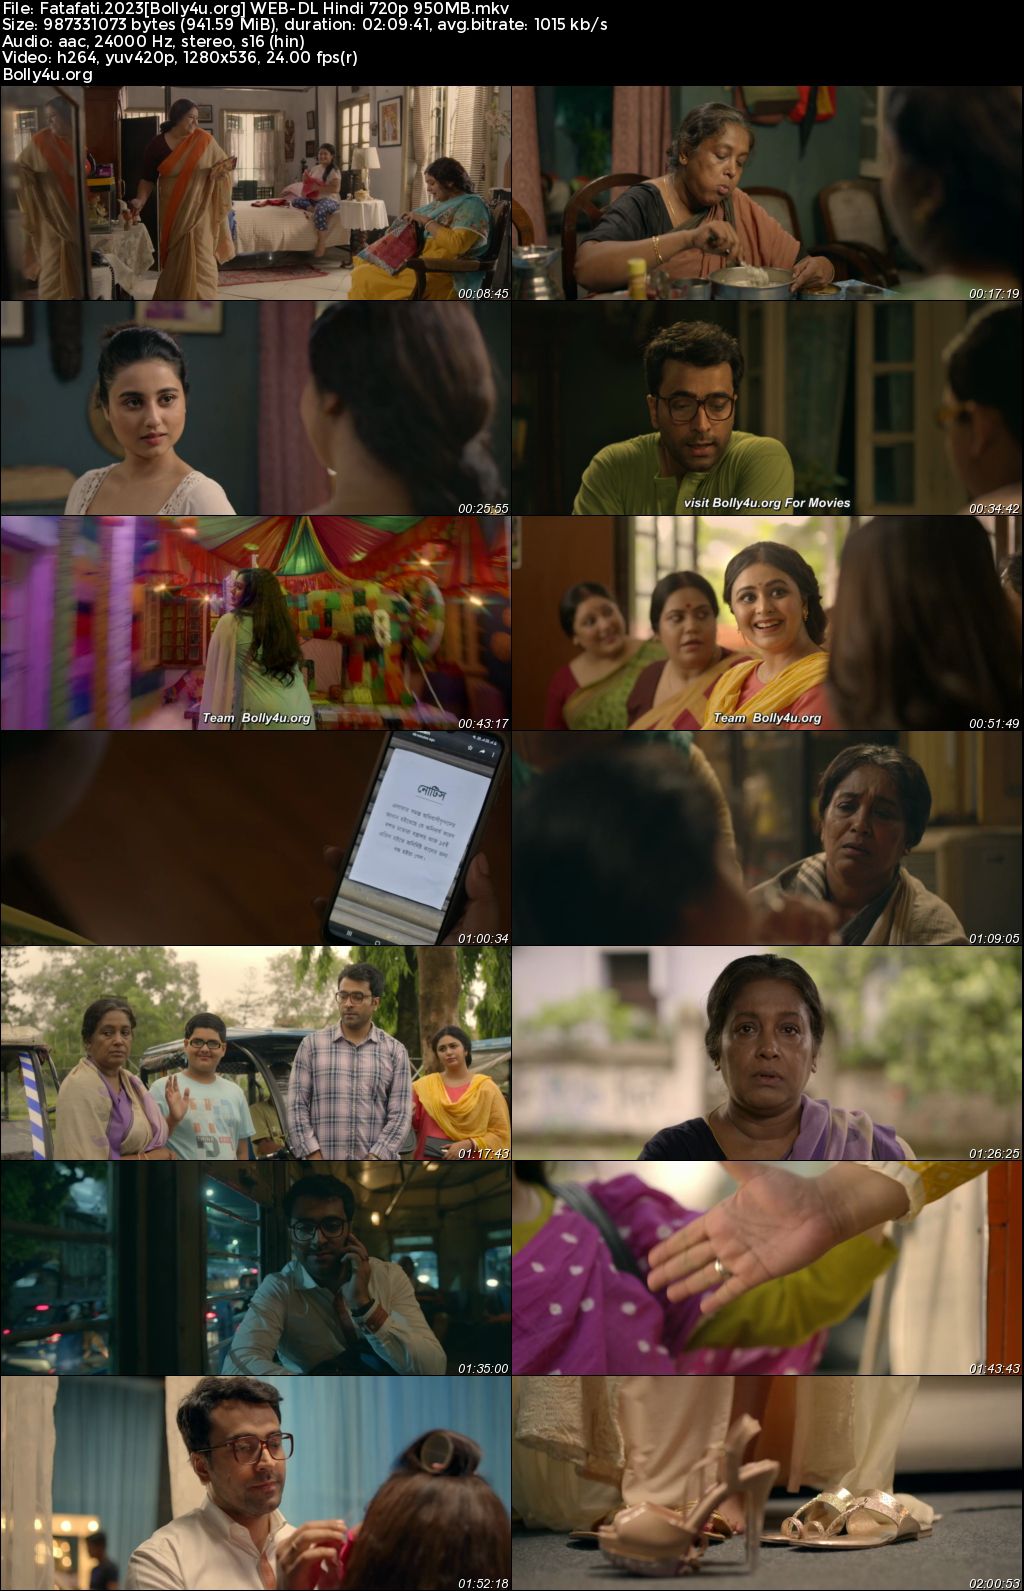 Fatafati 2023 WEB-DL Hindi Full Movie Download 1080p 720p 480p